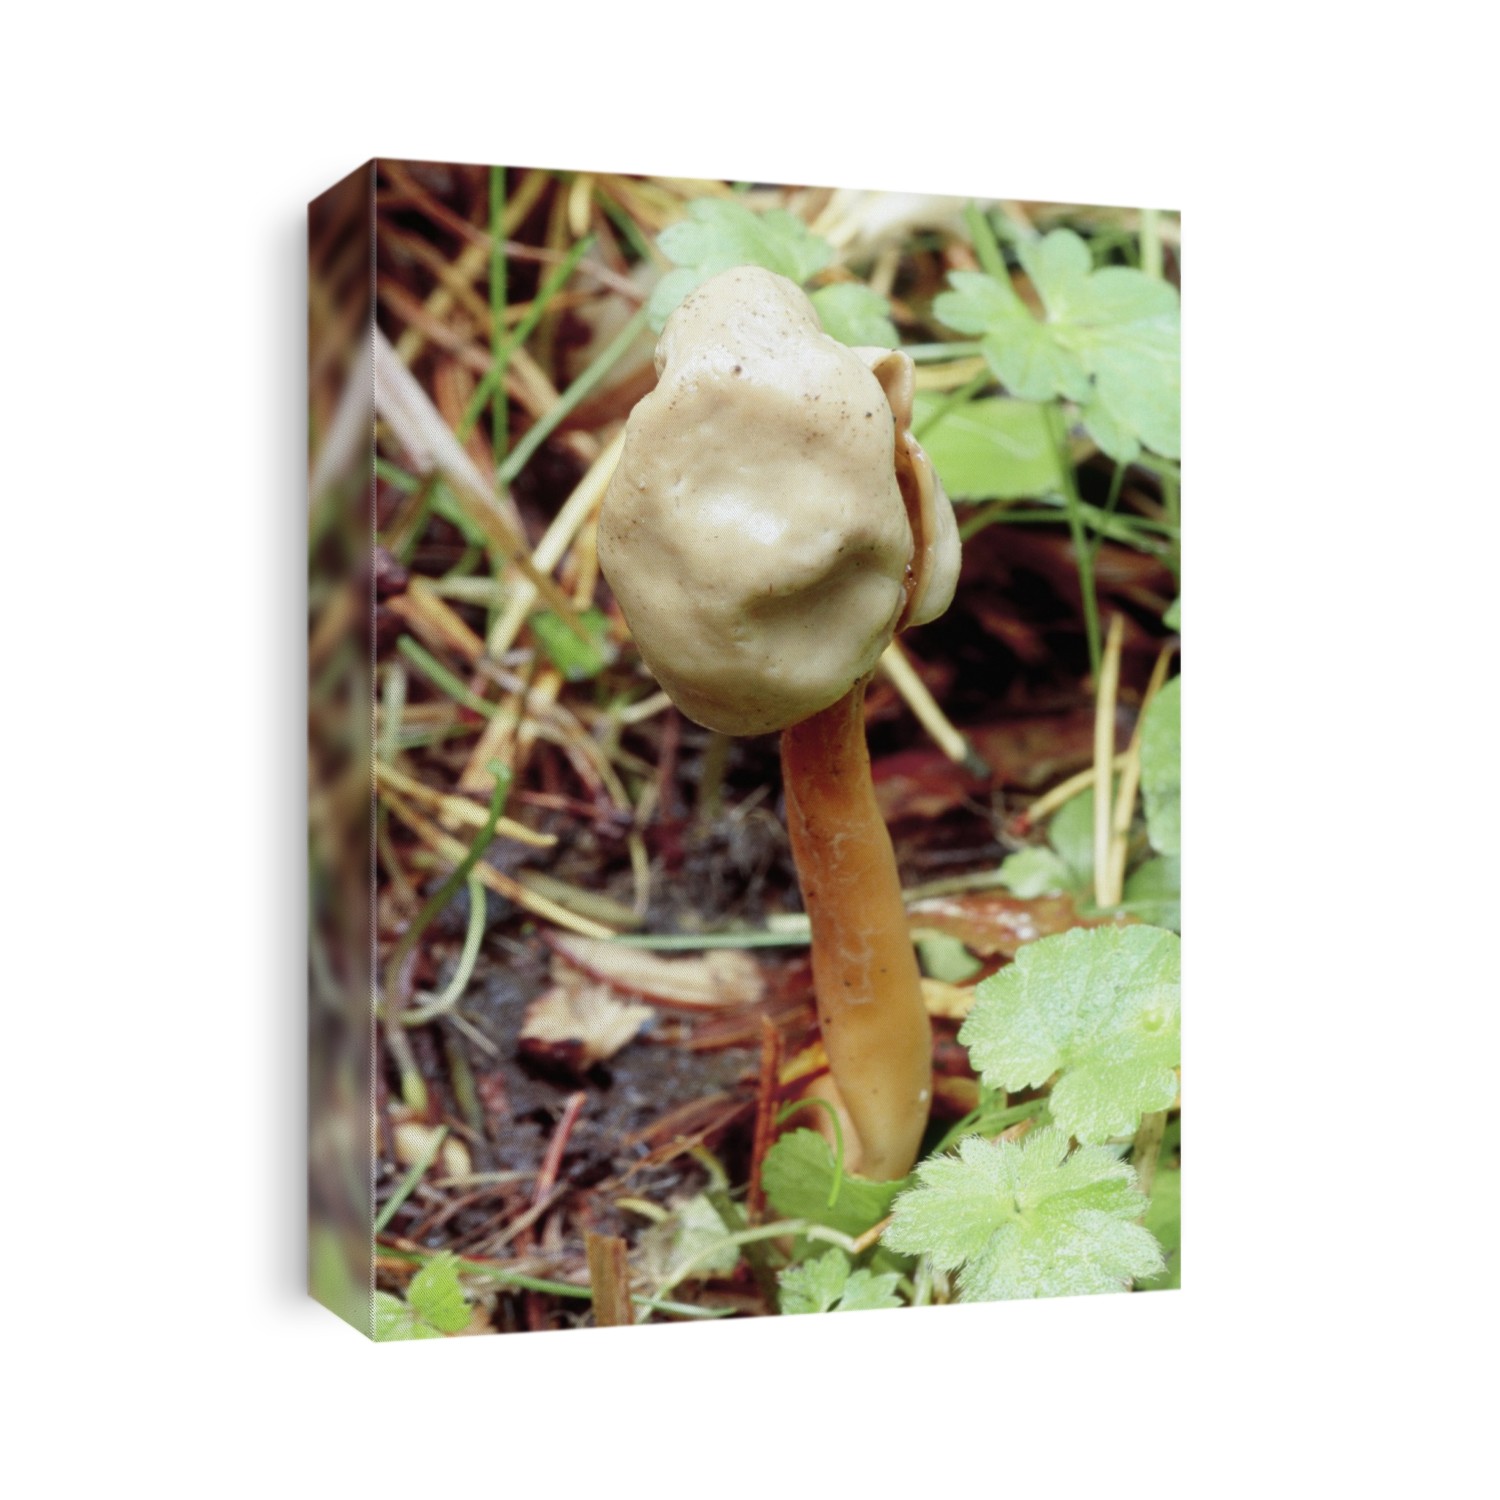 Flexible helvella (Helvella elastica) mushroom. Photographed in the Forest of Dean, Gloucestershire, UK.